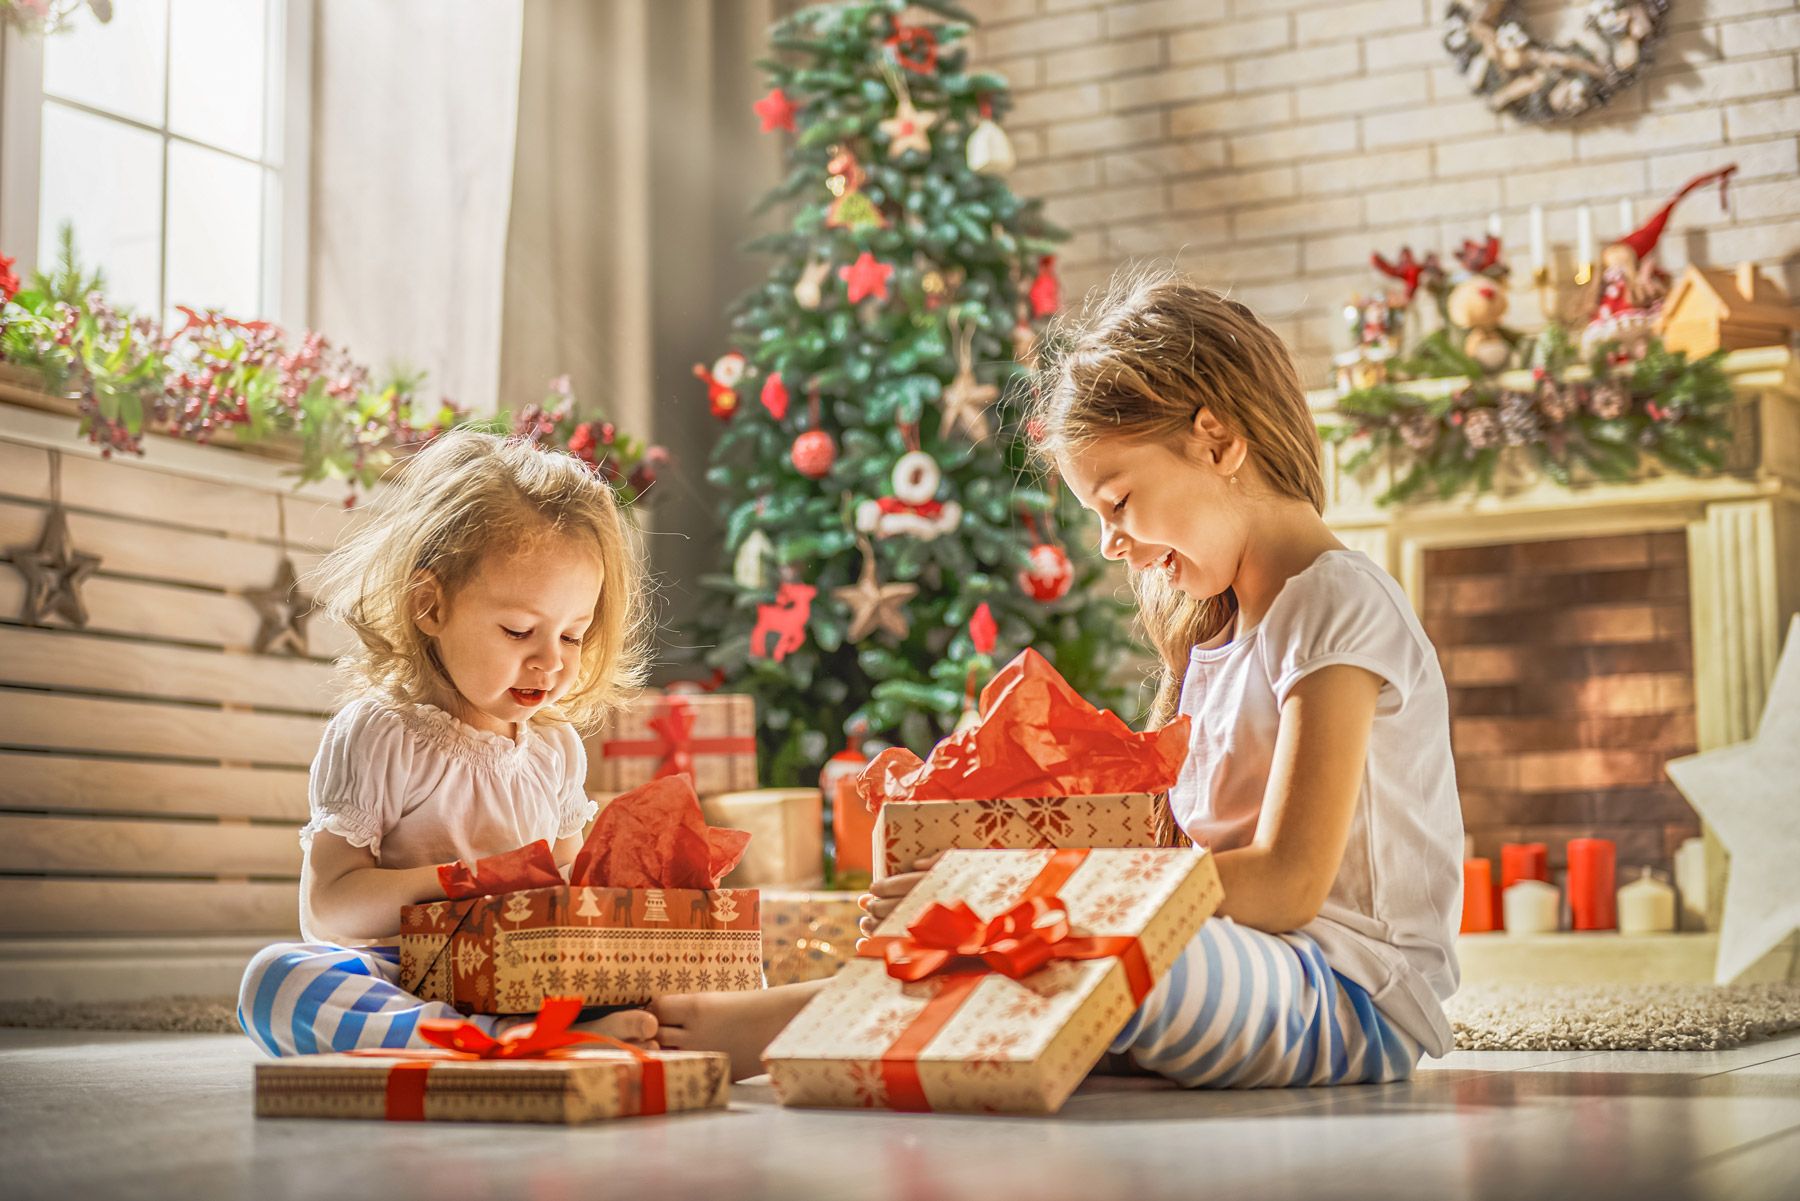 kids unwraping presents